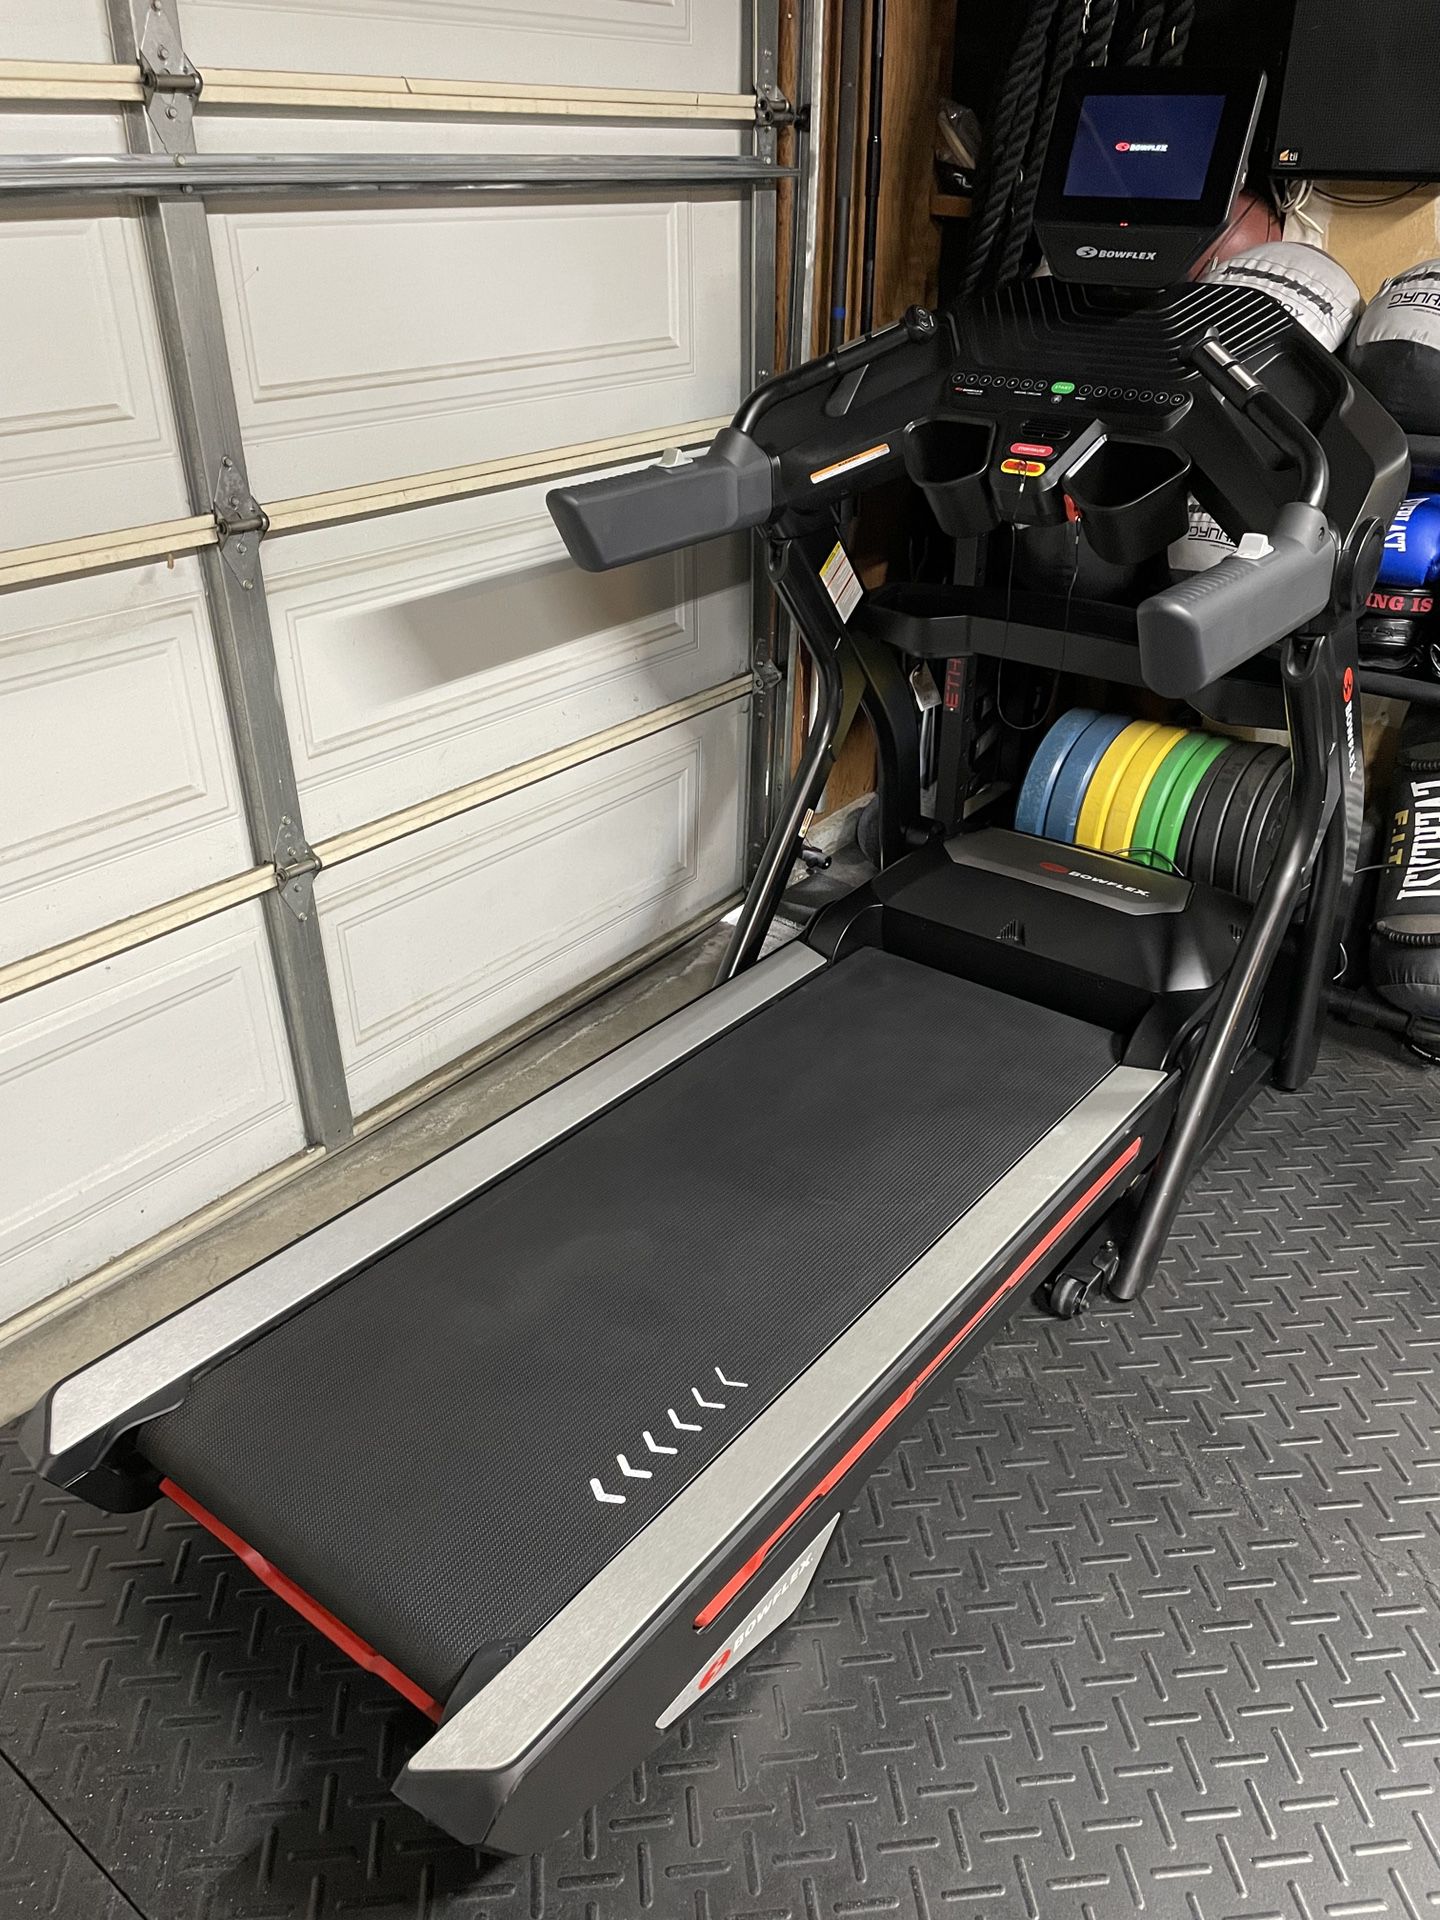 Bowflex T10 Treadmill Walk/Run/Jog Trainer Exercise Machine Workout Fitness Fold-able Home Gym